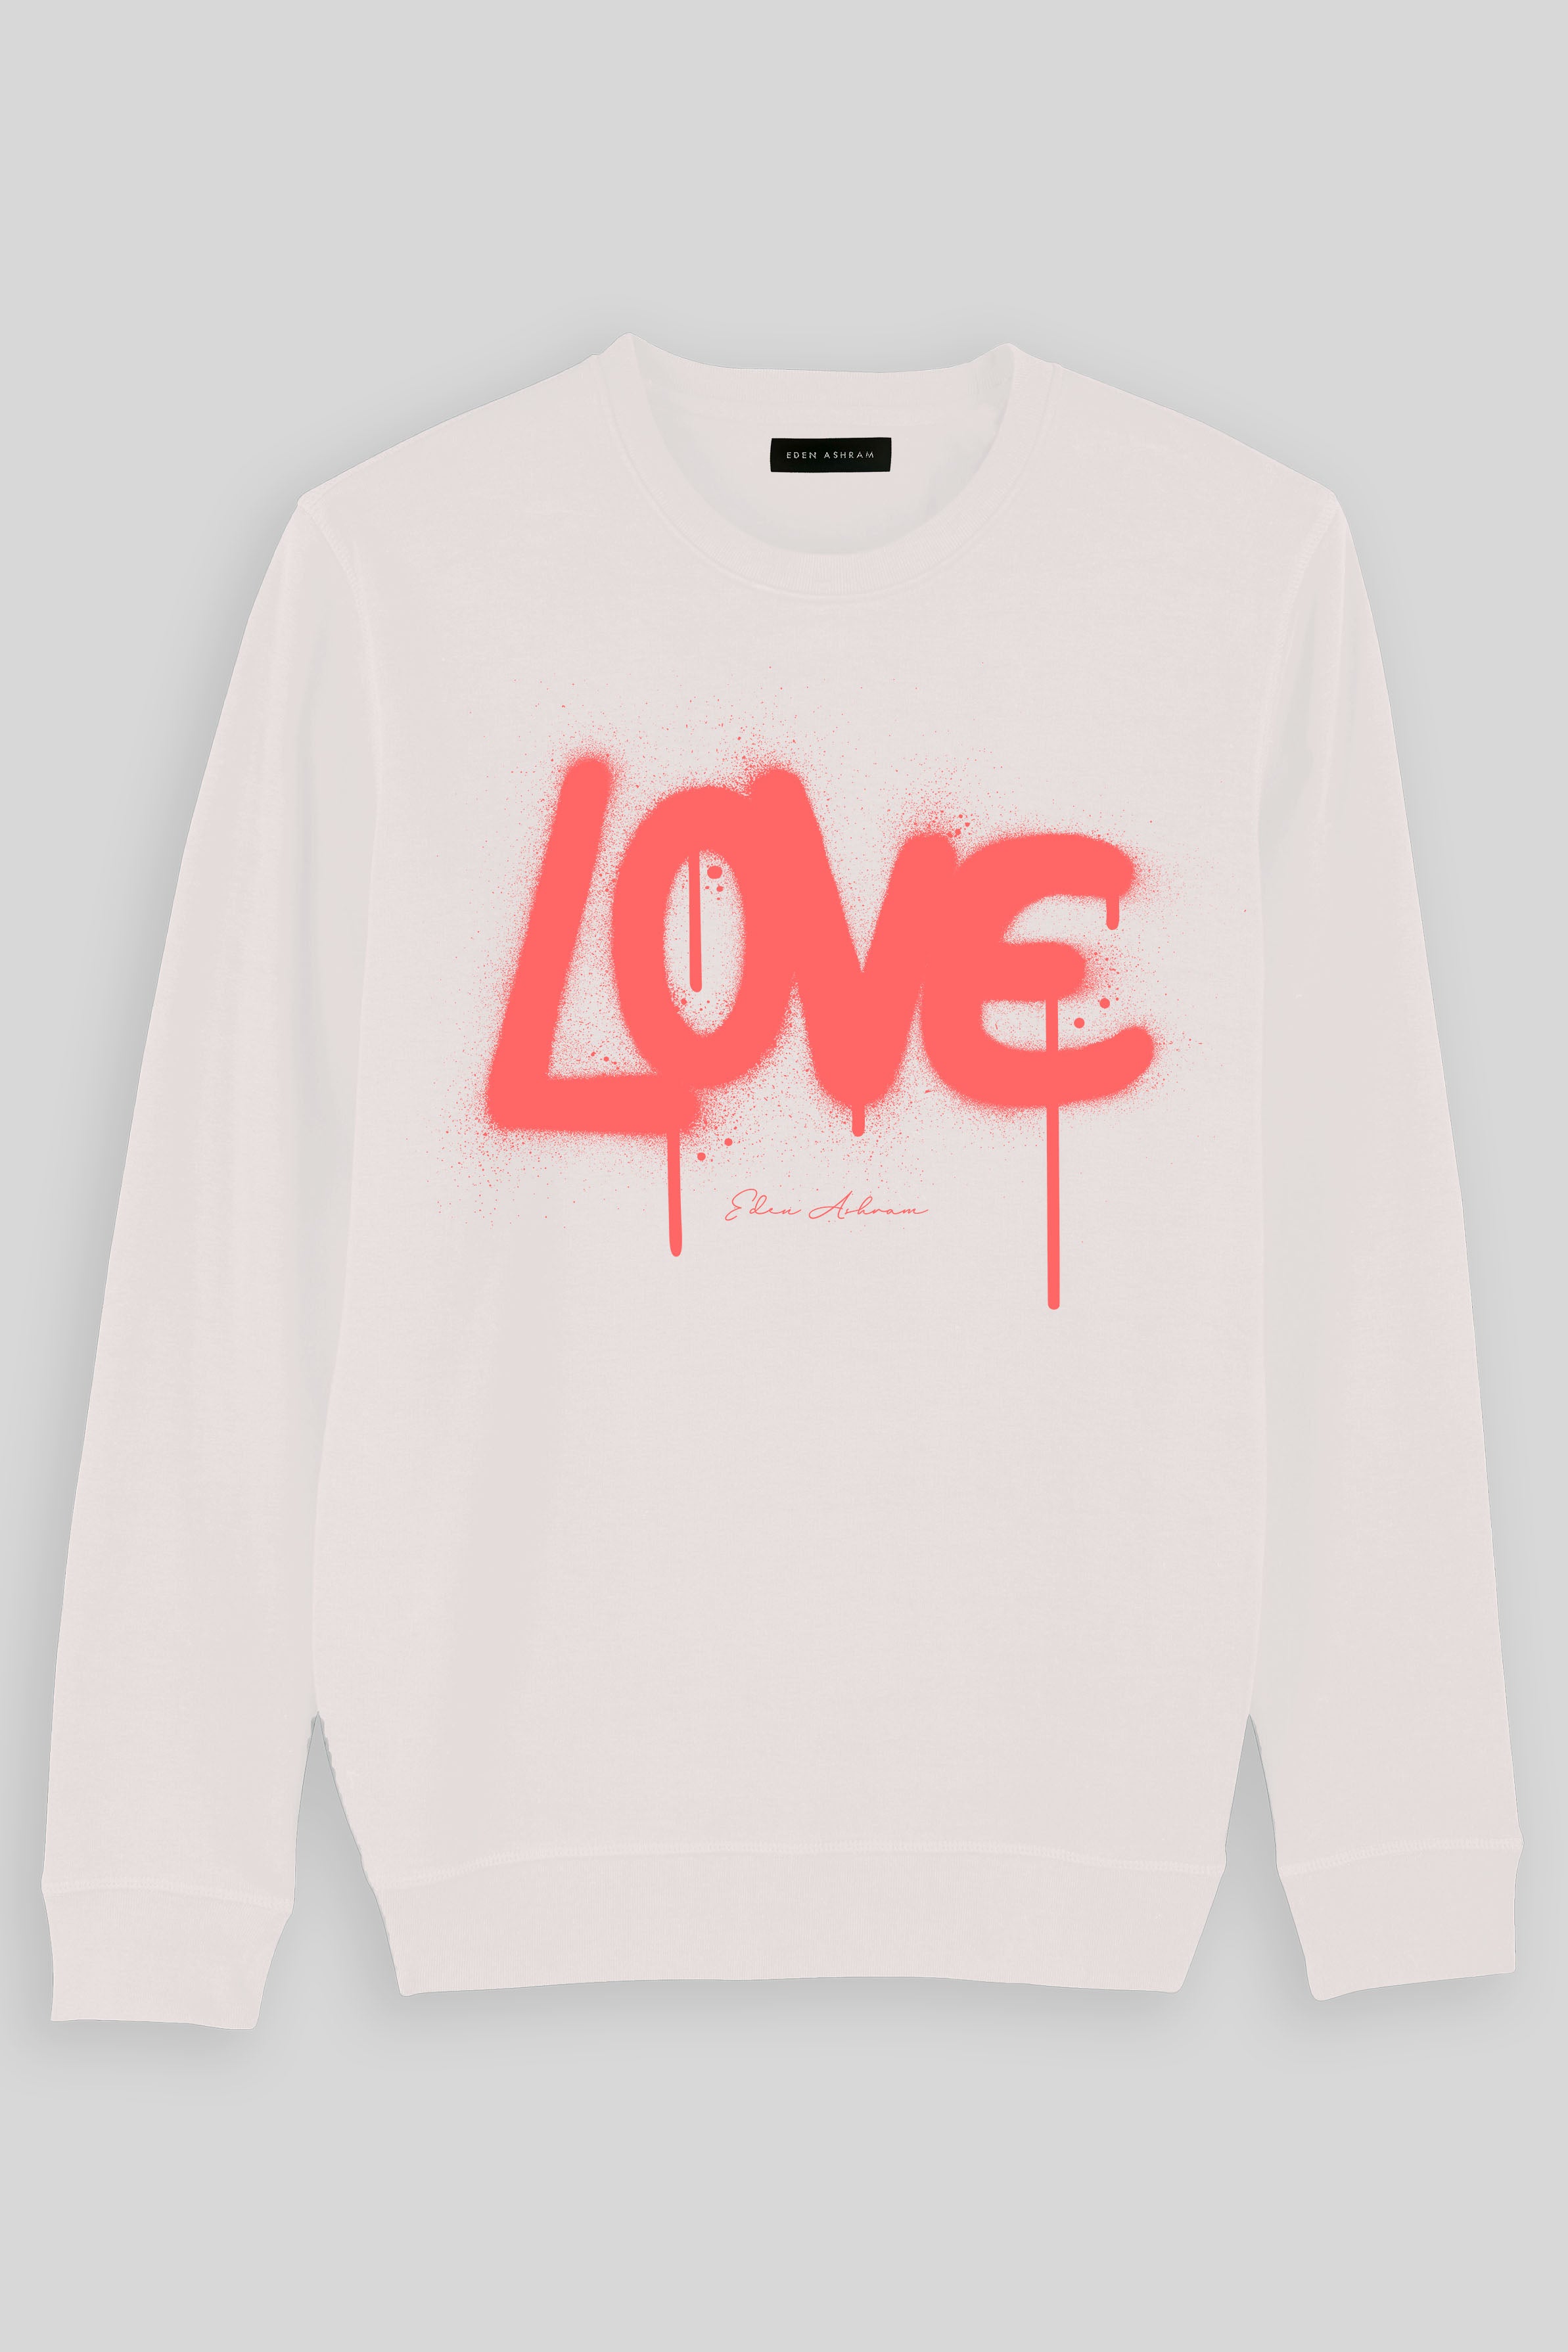 Eden Ashram Graffiti Love Premium Crew Neck Sweatshirt Vintage White